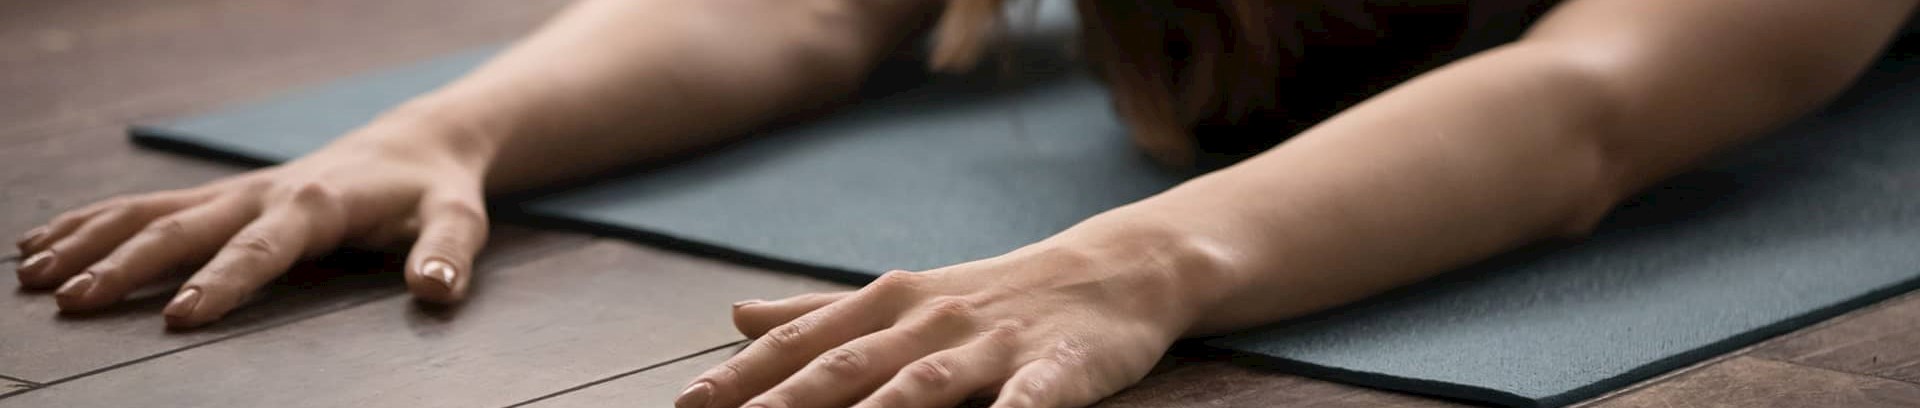 Mediyoga - en blid vej til dyb balance, yogakursus ved FOF Arhus